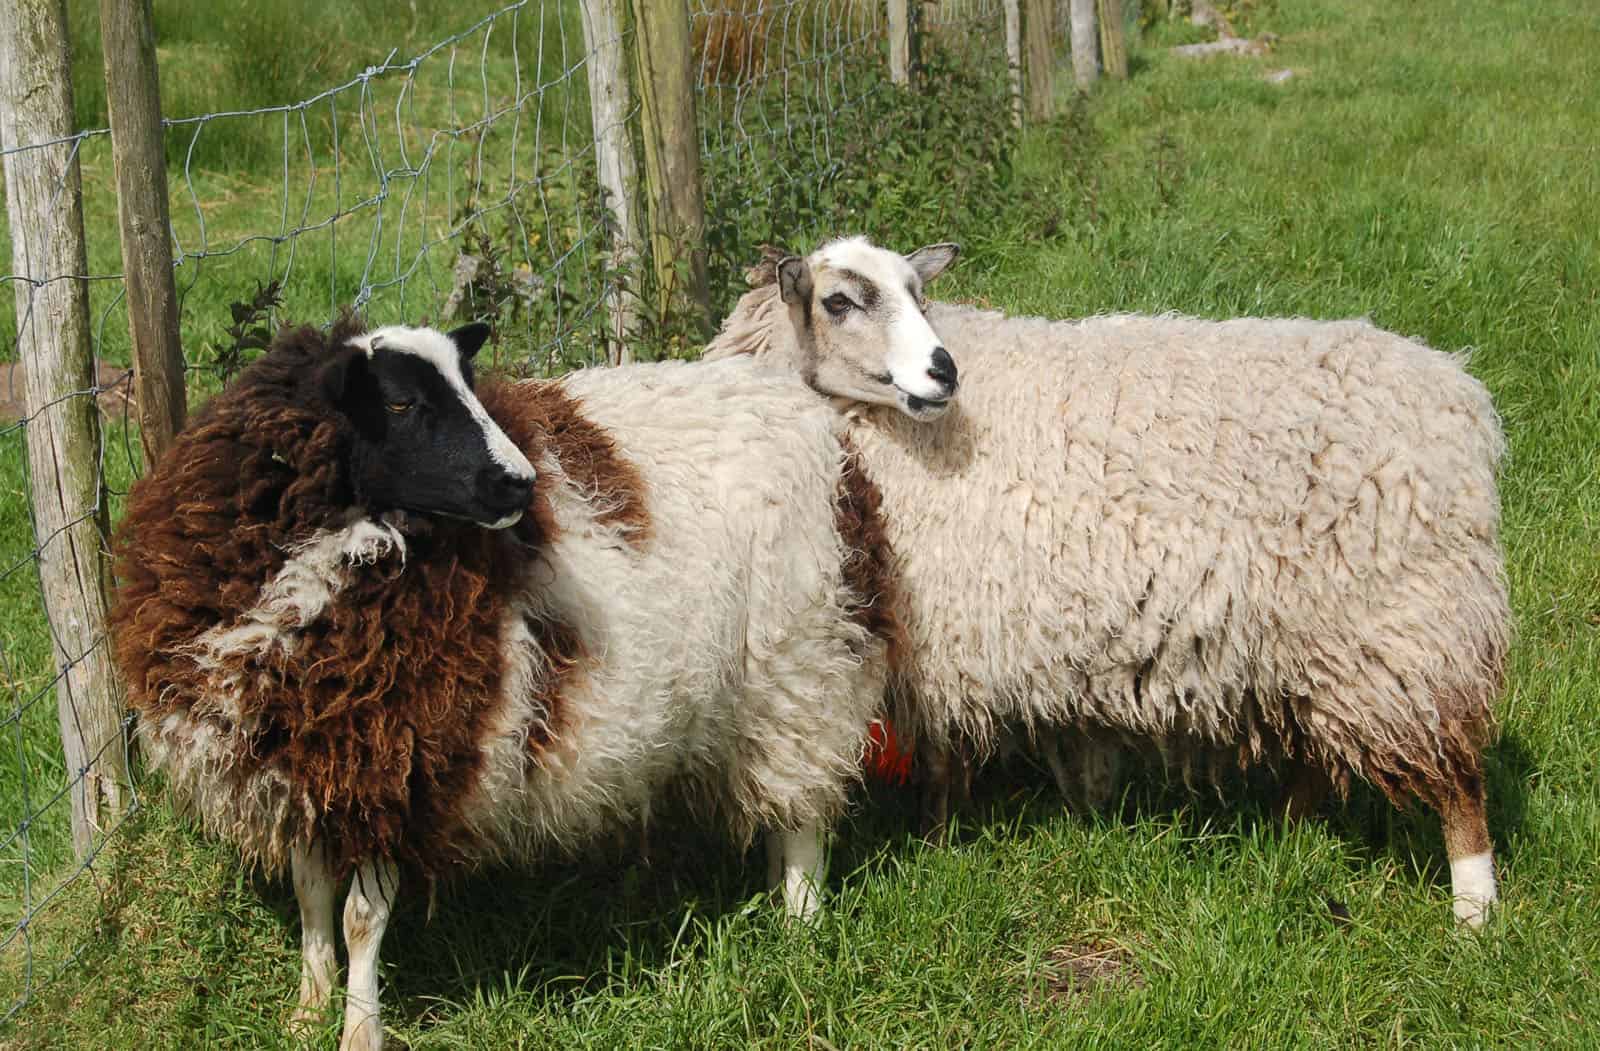 Phlox Smudge patchwork sheep coarse kemp wool